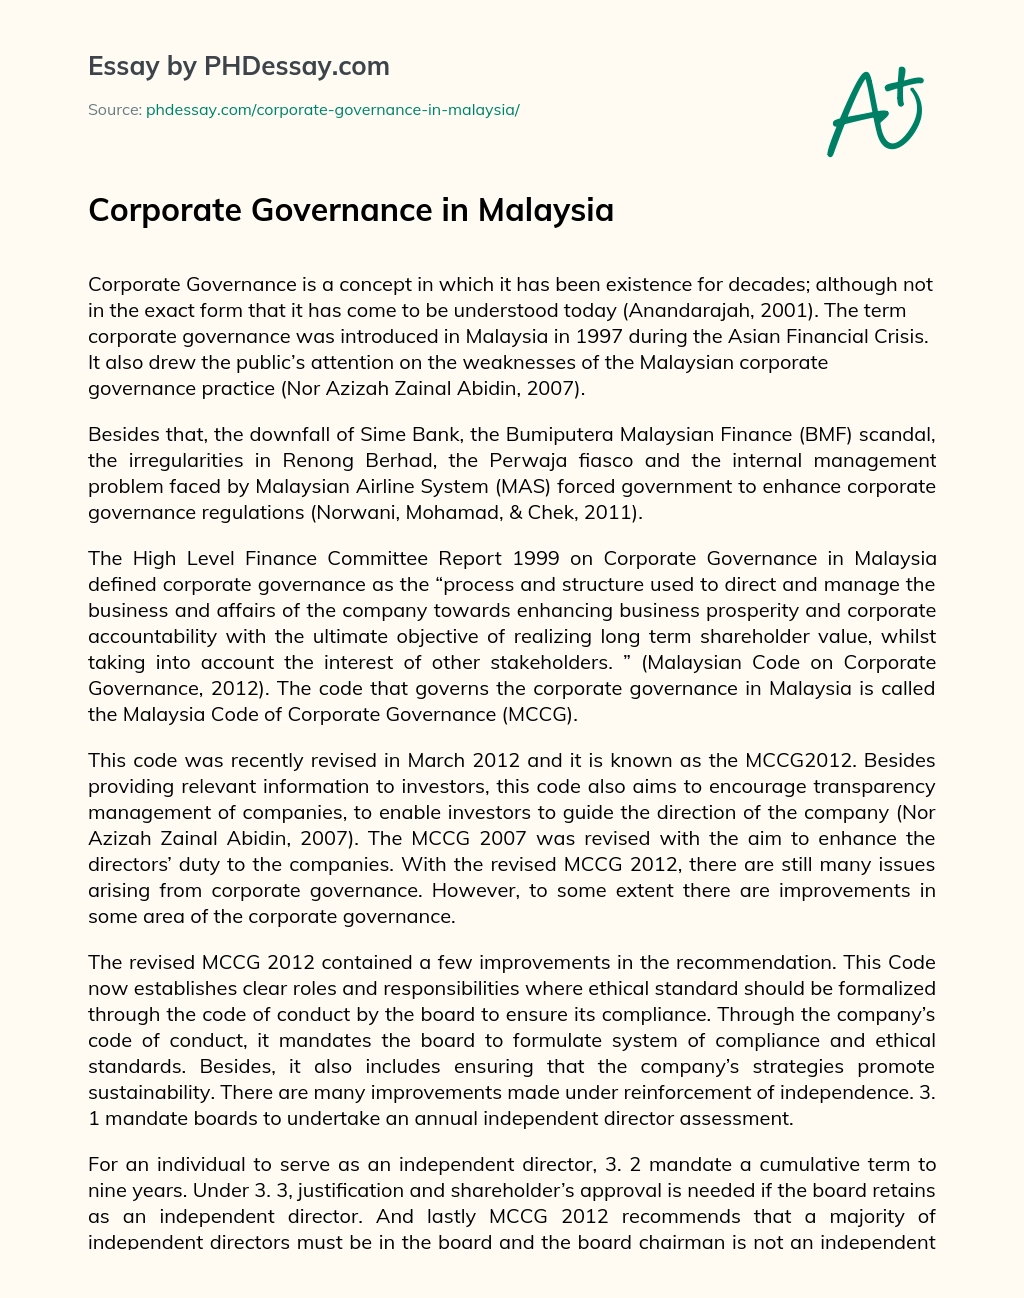 Corporate Governance in Malaysia essay